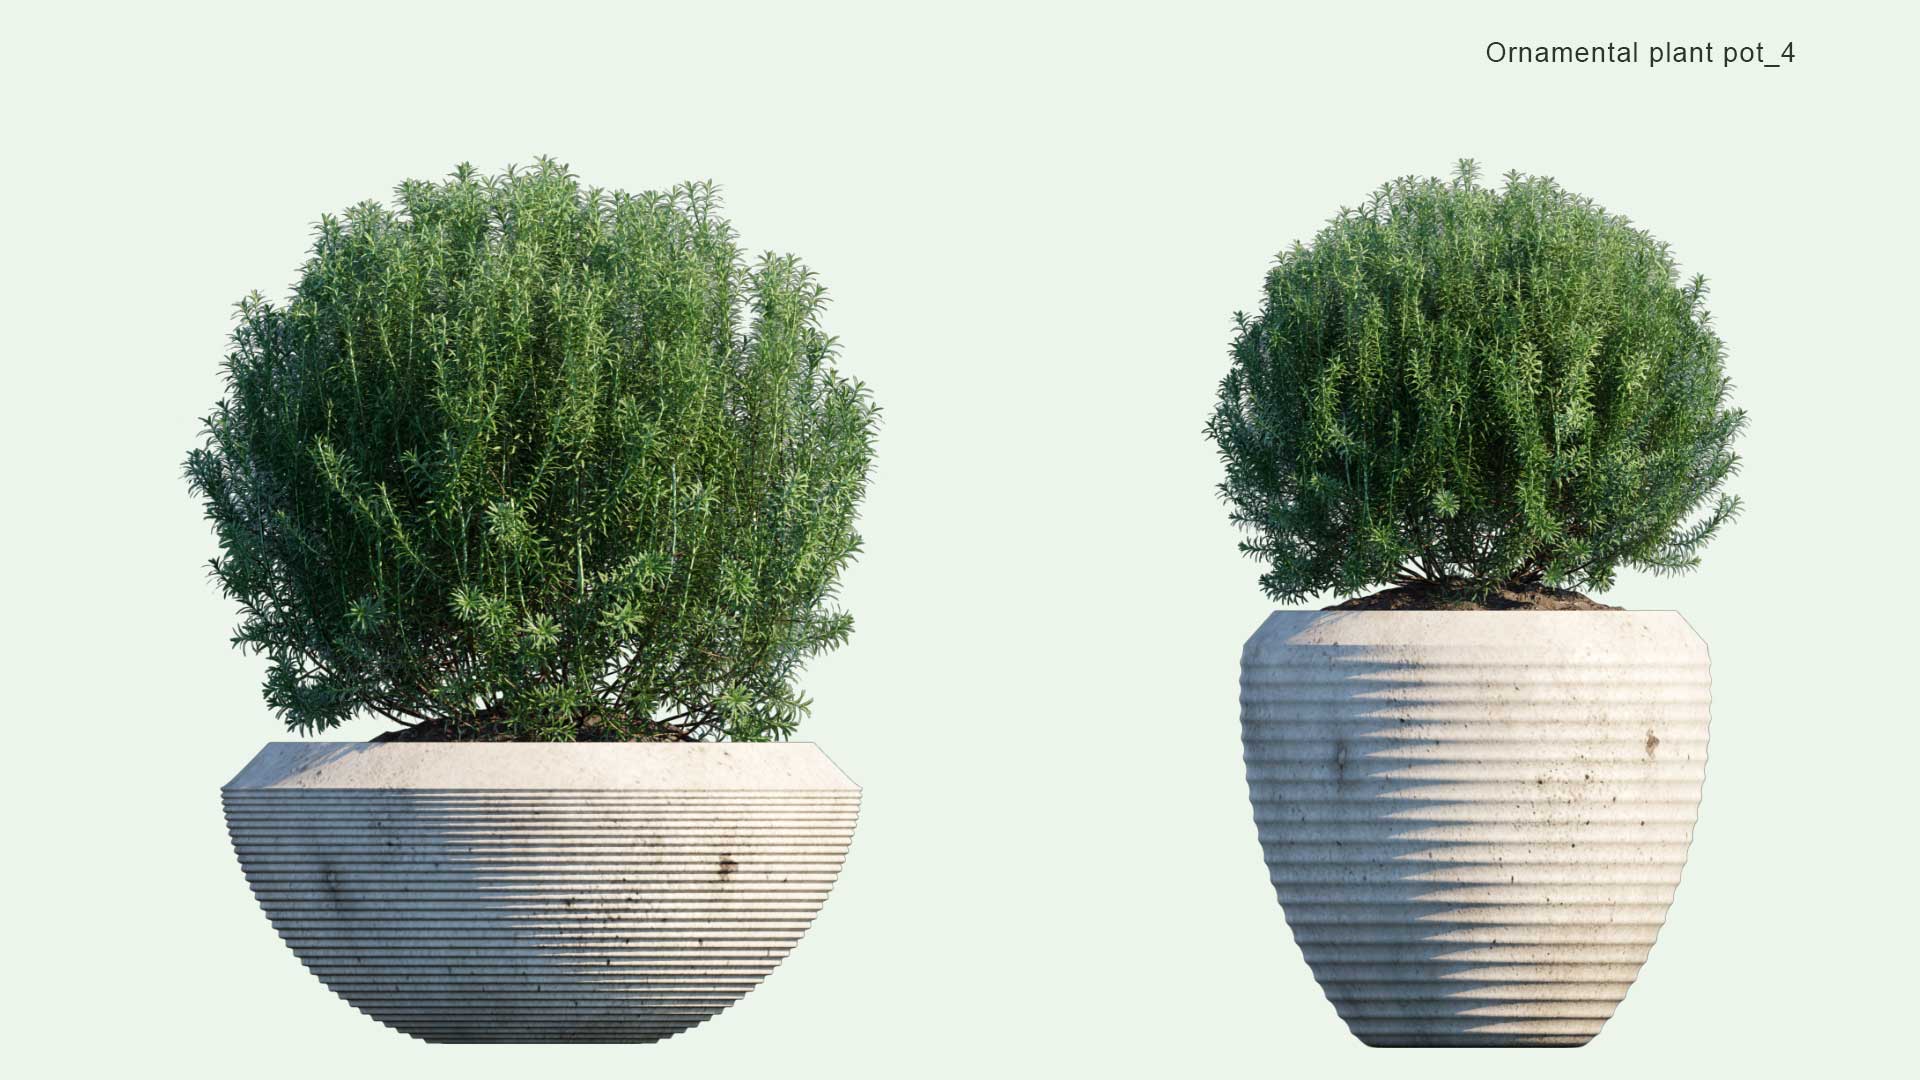 2D Ornamental Pot Plant 04 - Rosmarinus Officinalis 'Albus'